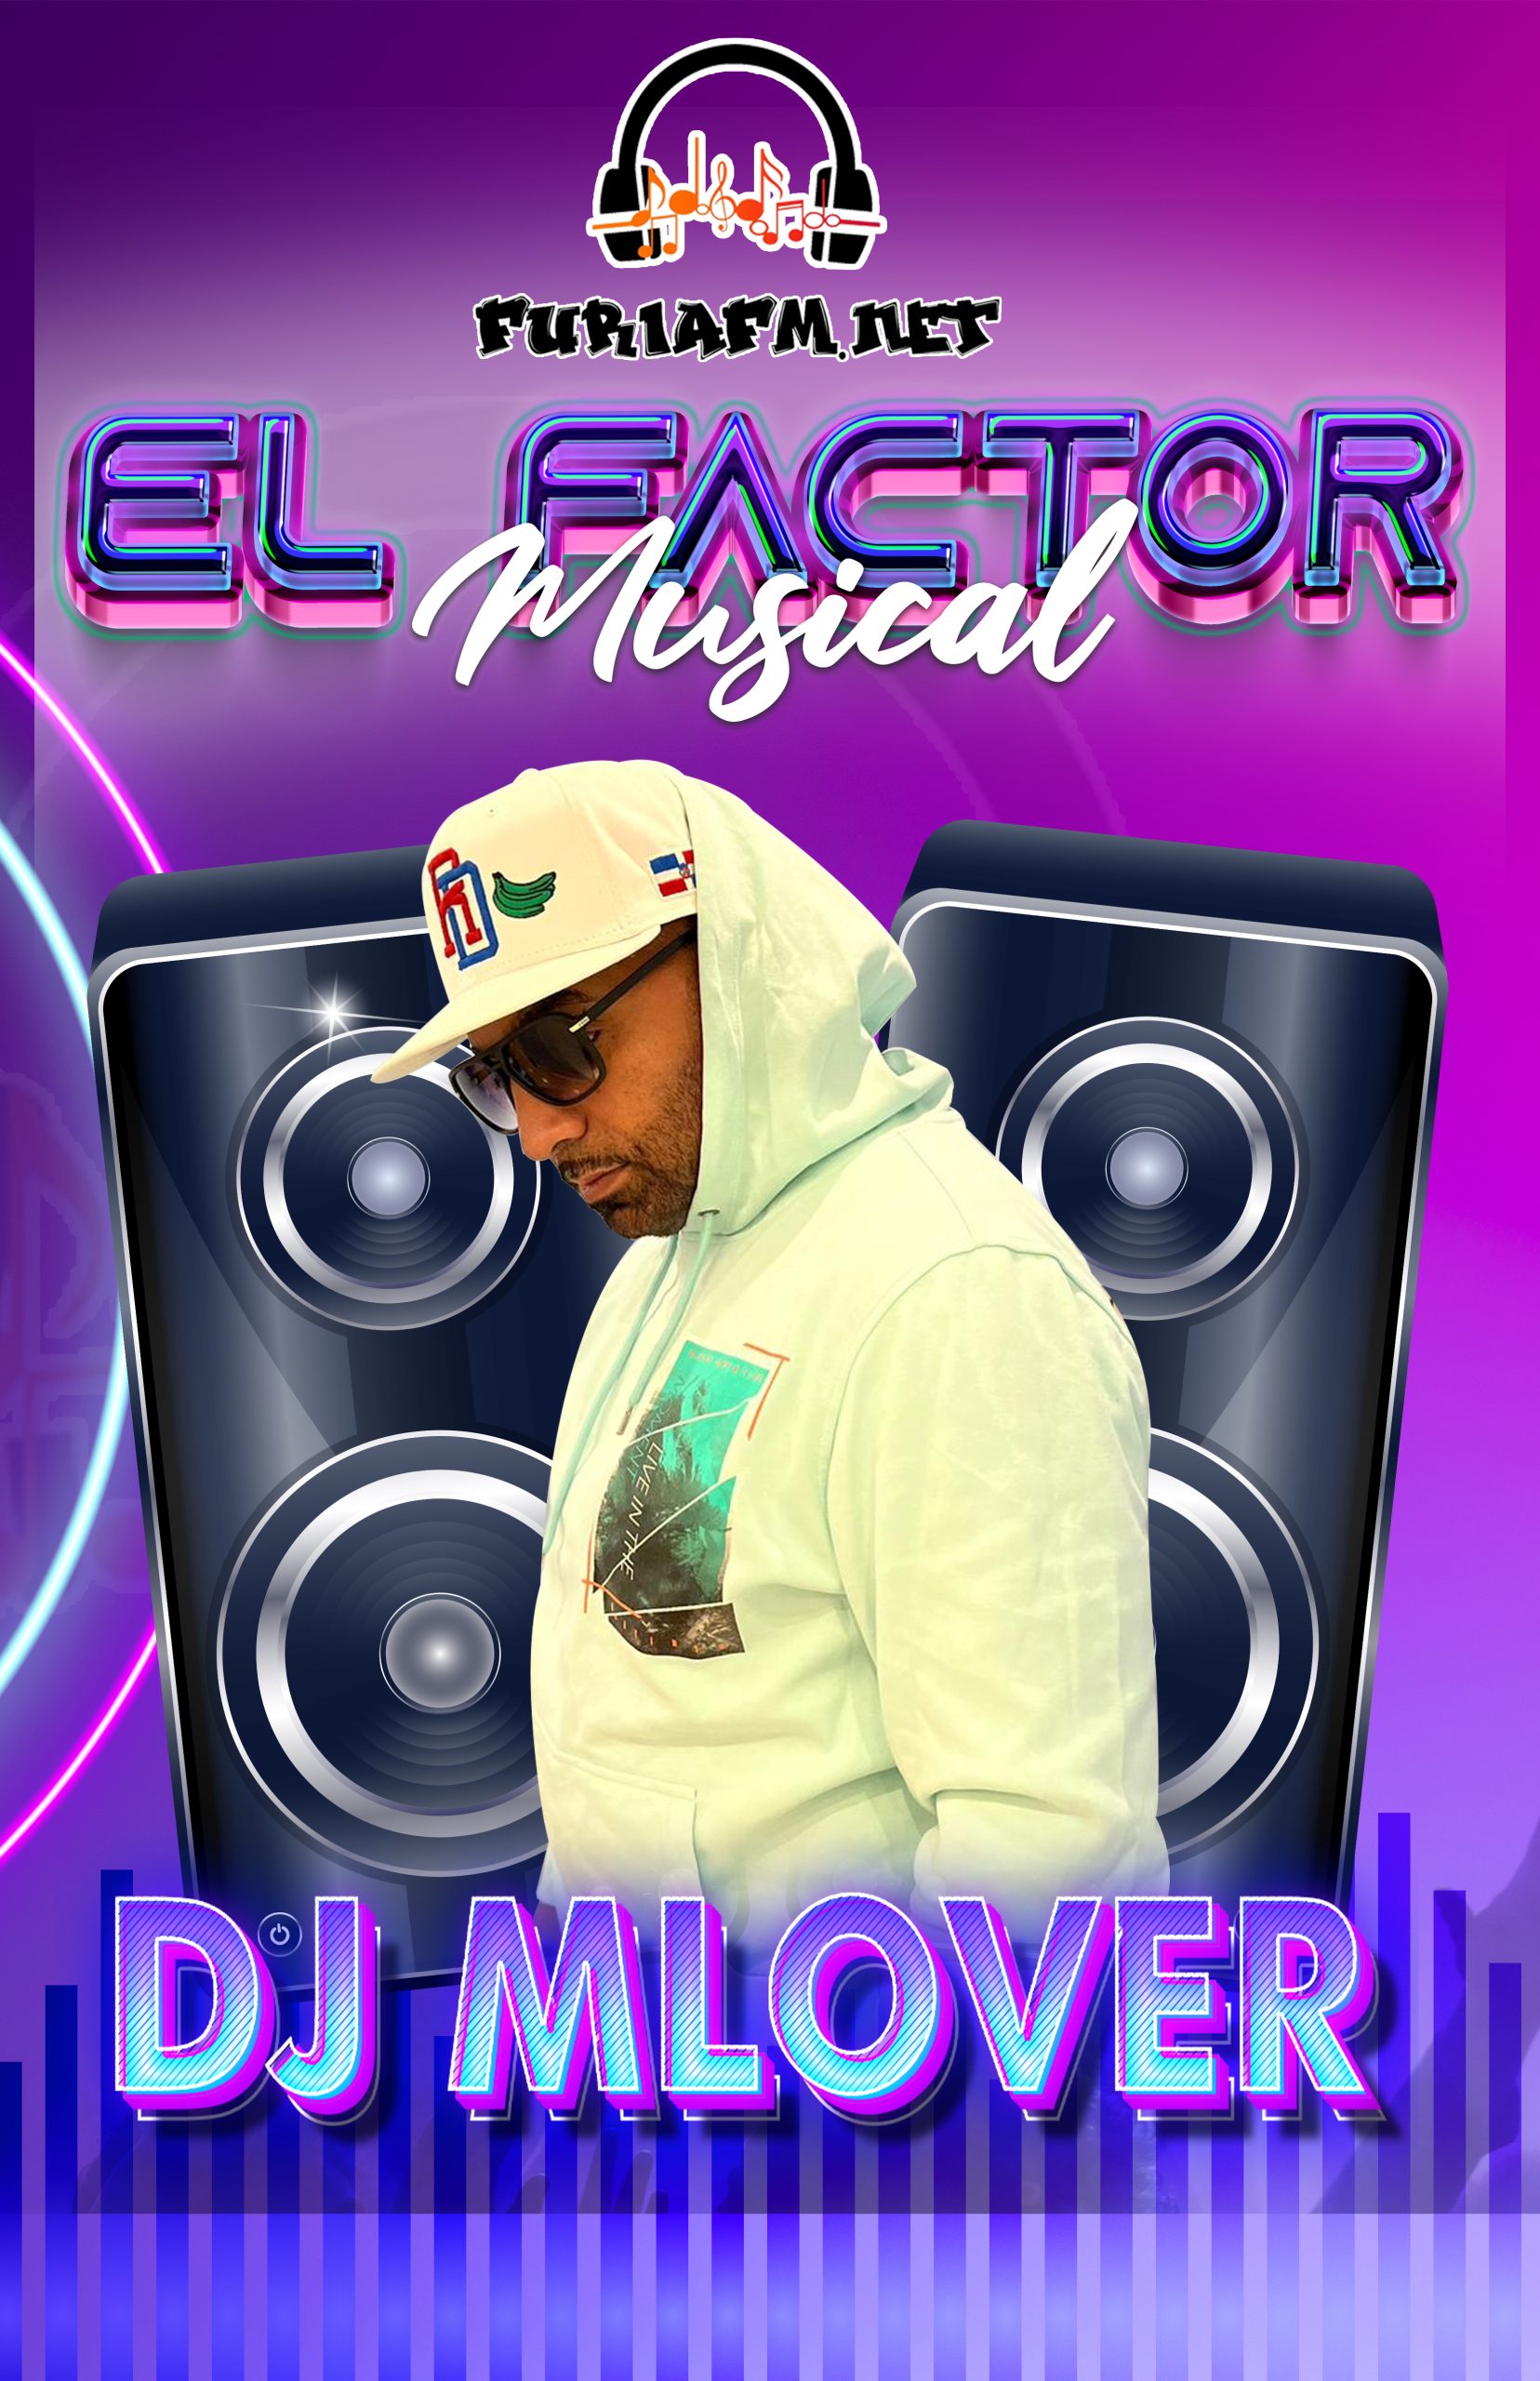 DJ mlover 2